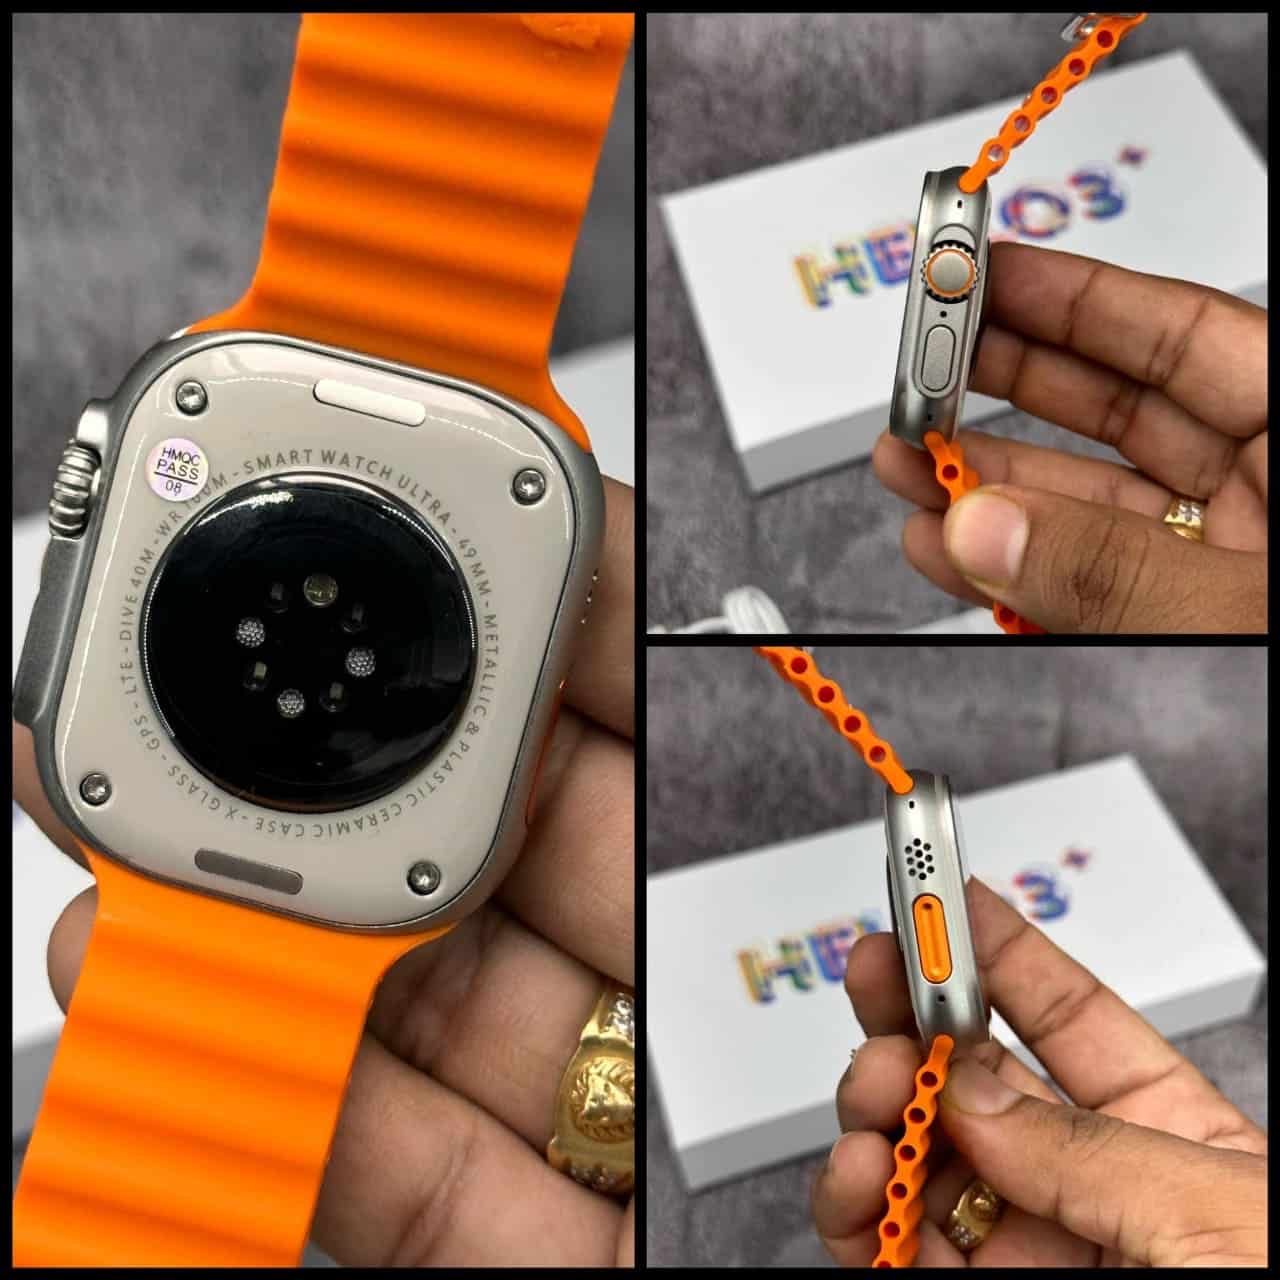 VWAR Hello Watch 3 + Plus Smart Watch Ultra 2 49mm AMOLED 4GB ROM – vwar